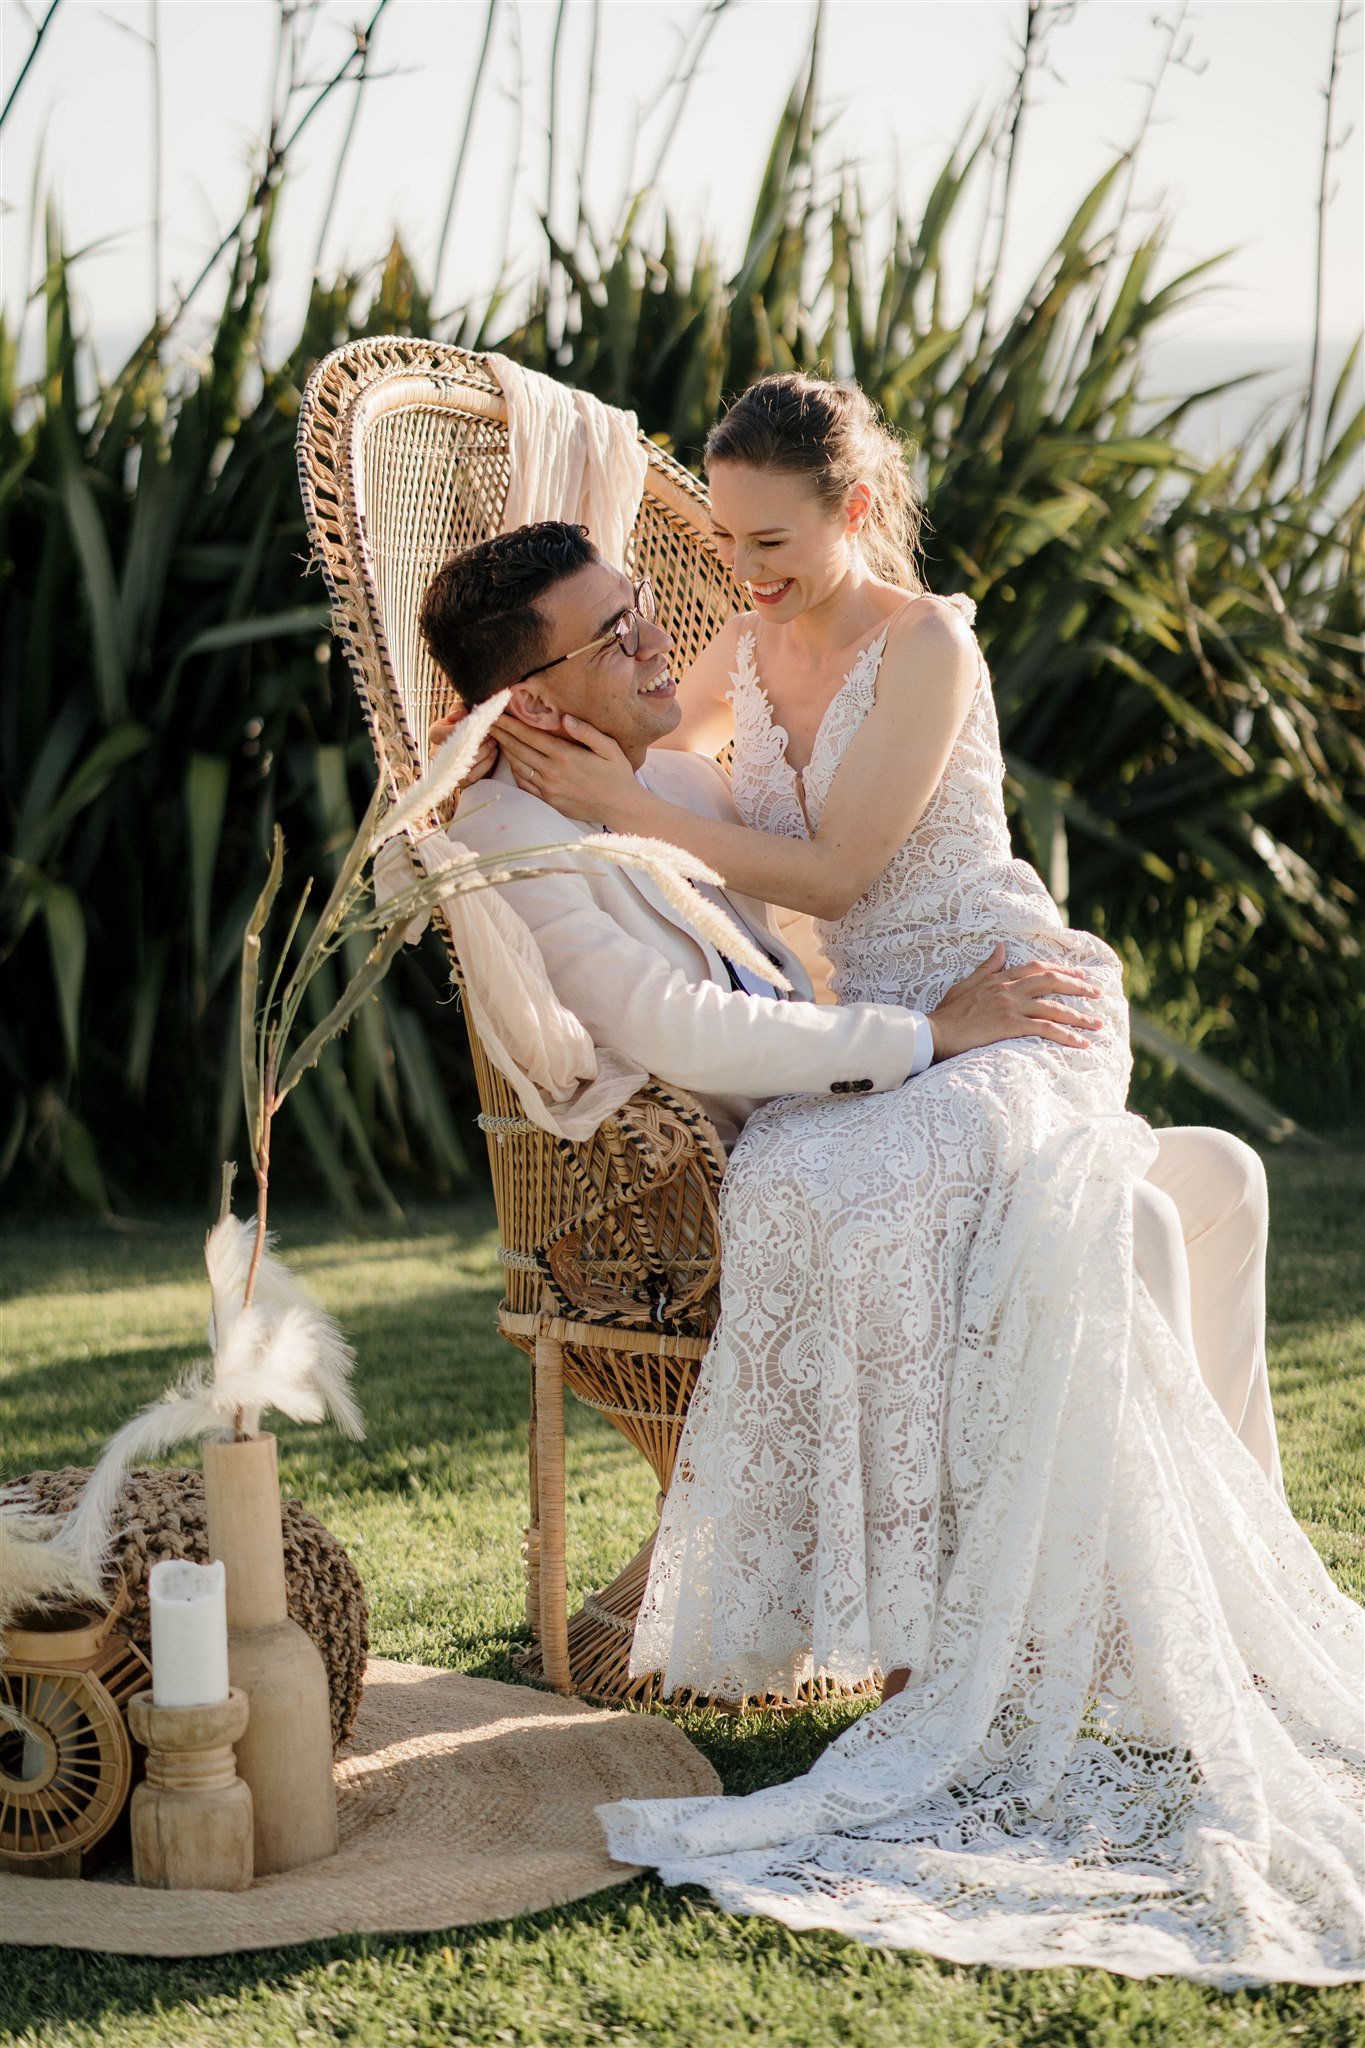 castaways-NZ-new-zealand-auckland-wedding-photographer-photography-videography-film-dear-white-productions-best-venue-waiuku-engagement-elopement-style-beach-intimate (298).jpg